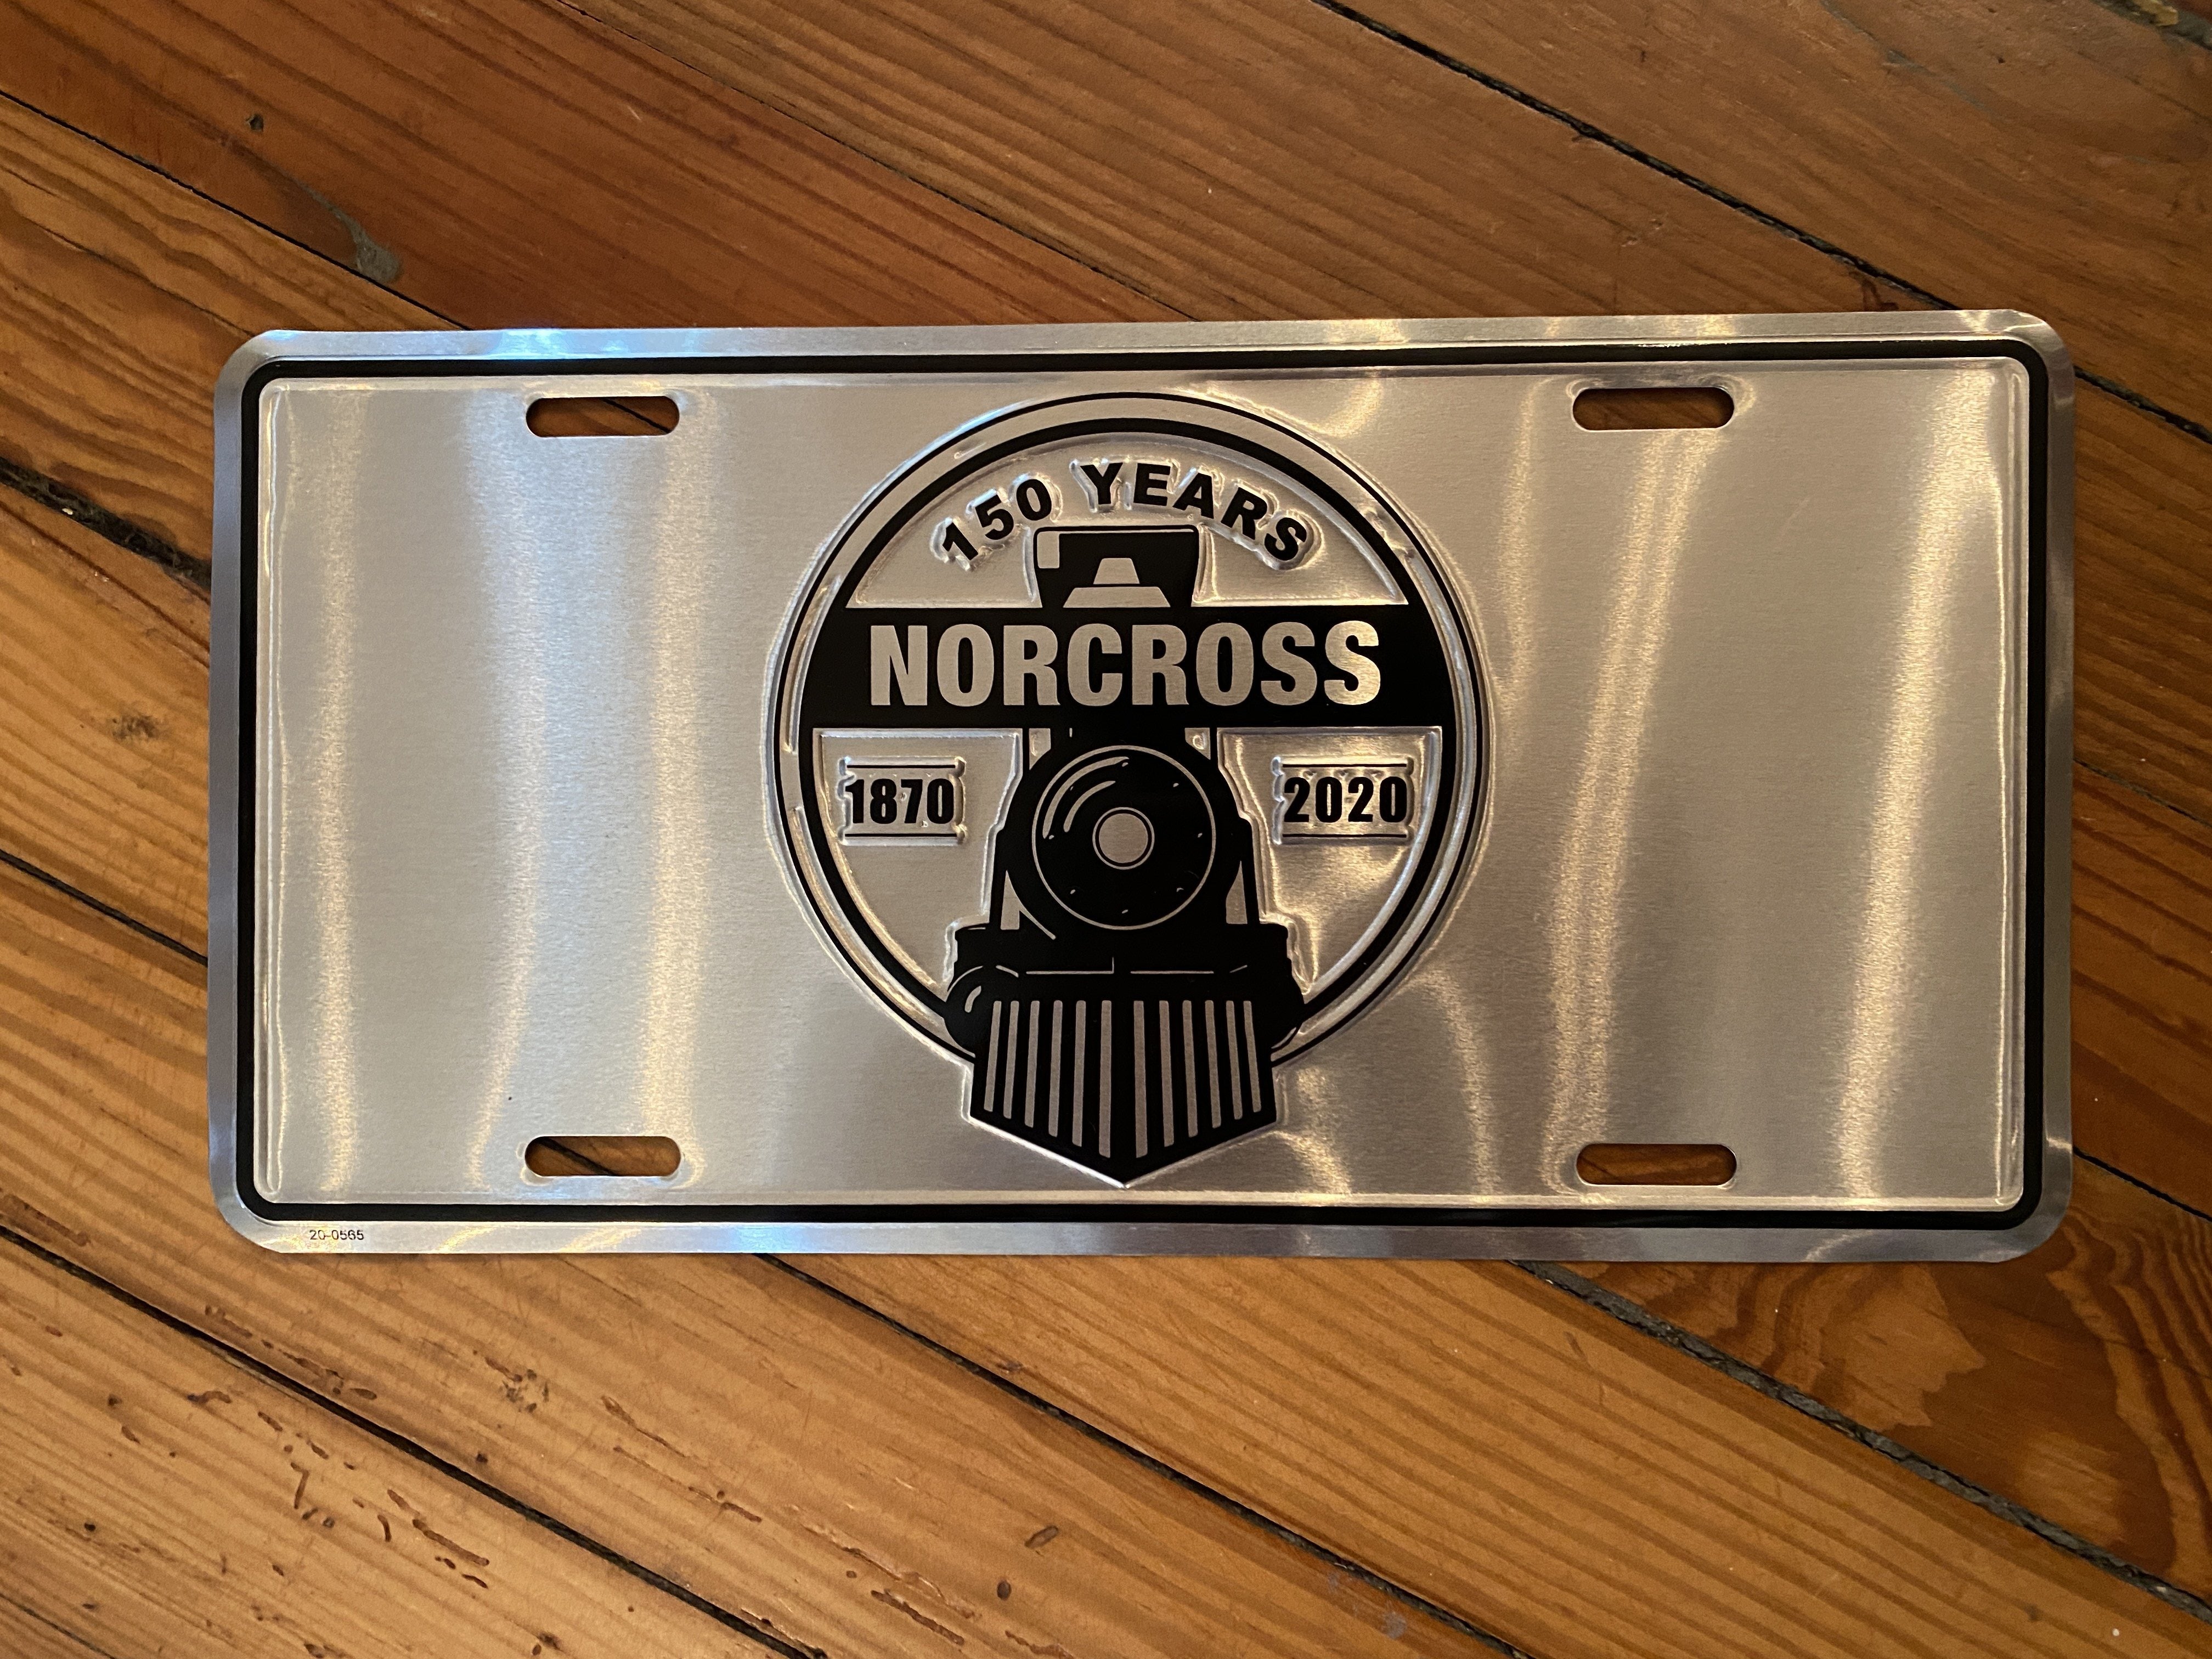 Historic Norcross 150th Anniversary License Plate